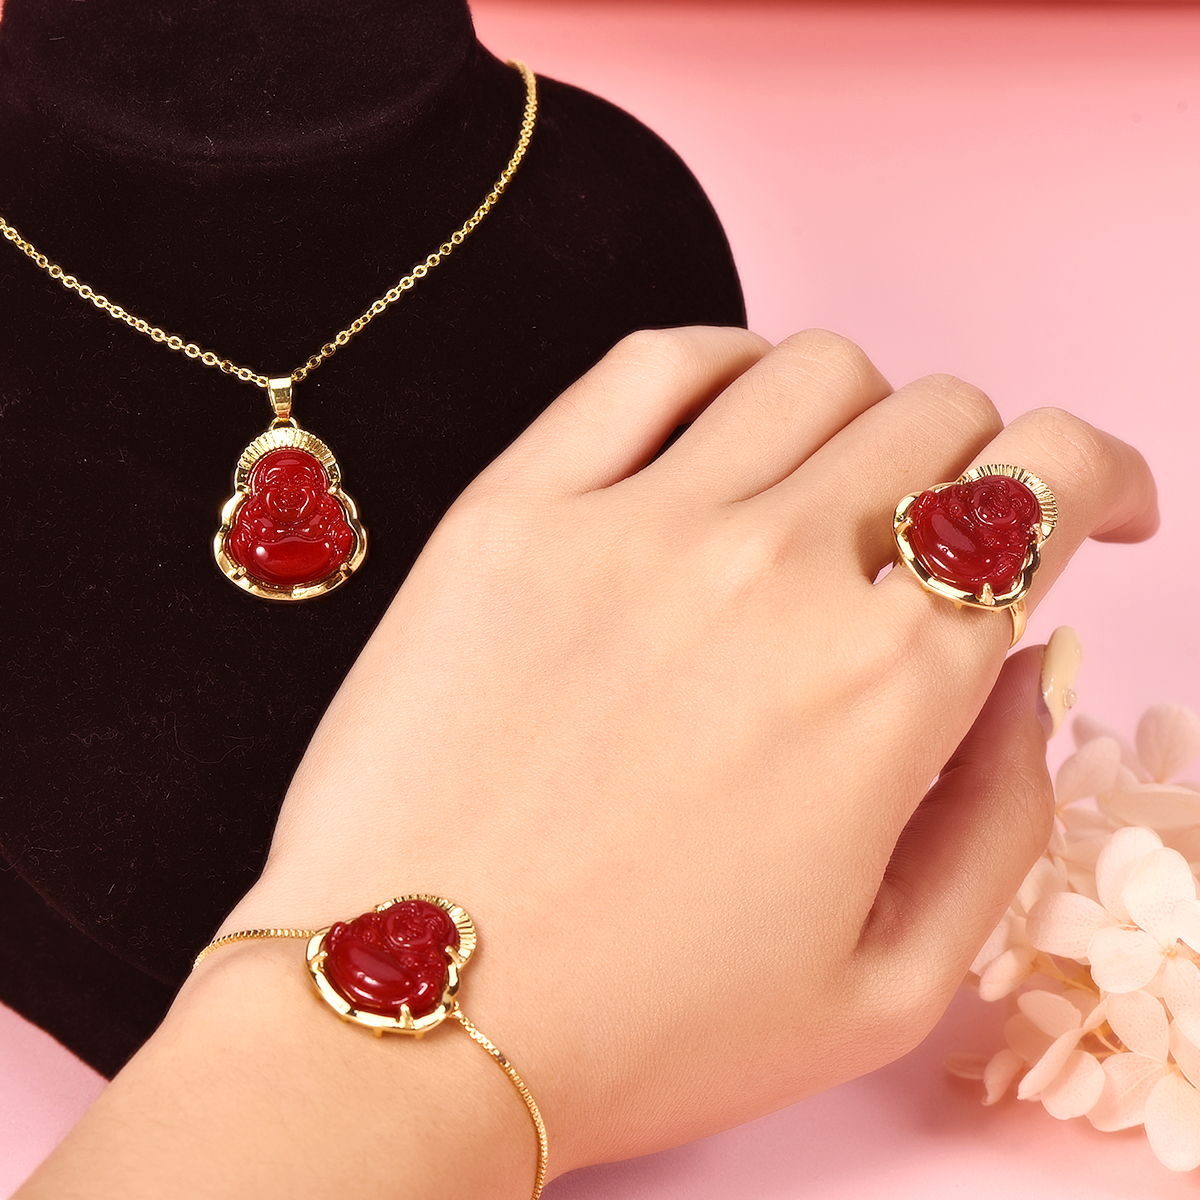 Smile Maitreya Buddha Pendant Jewelry Set Necklace and Adjustable Bracelet Ring 3pcs Gift For Mom-silviax